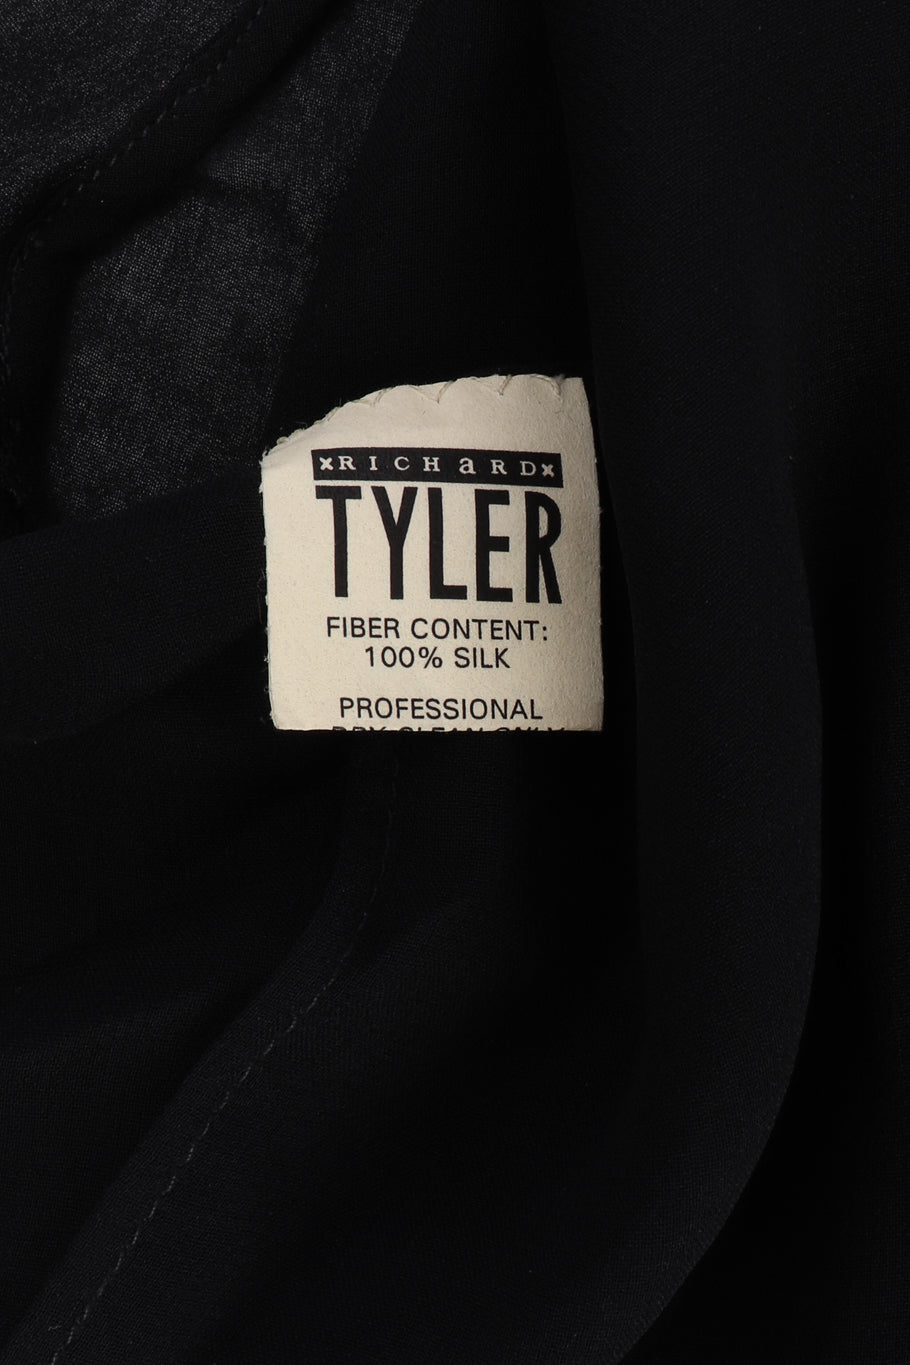 Vintage Richard Tyler Silk Bolero Top and Pants Set top secondary signature and fabric content label closeup @Recessla 